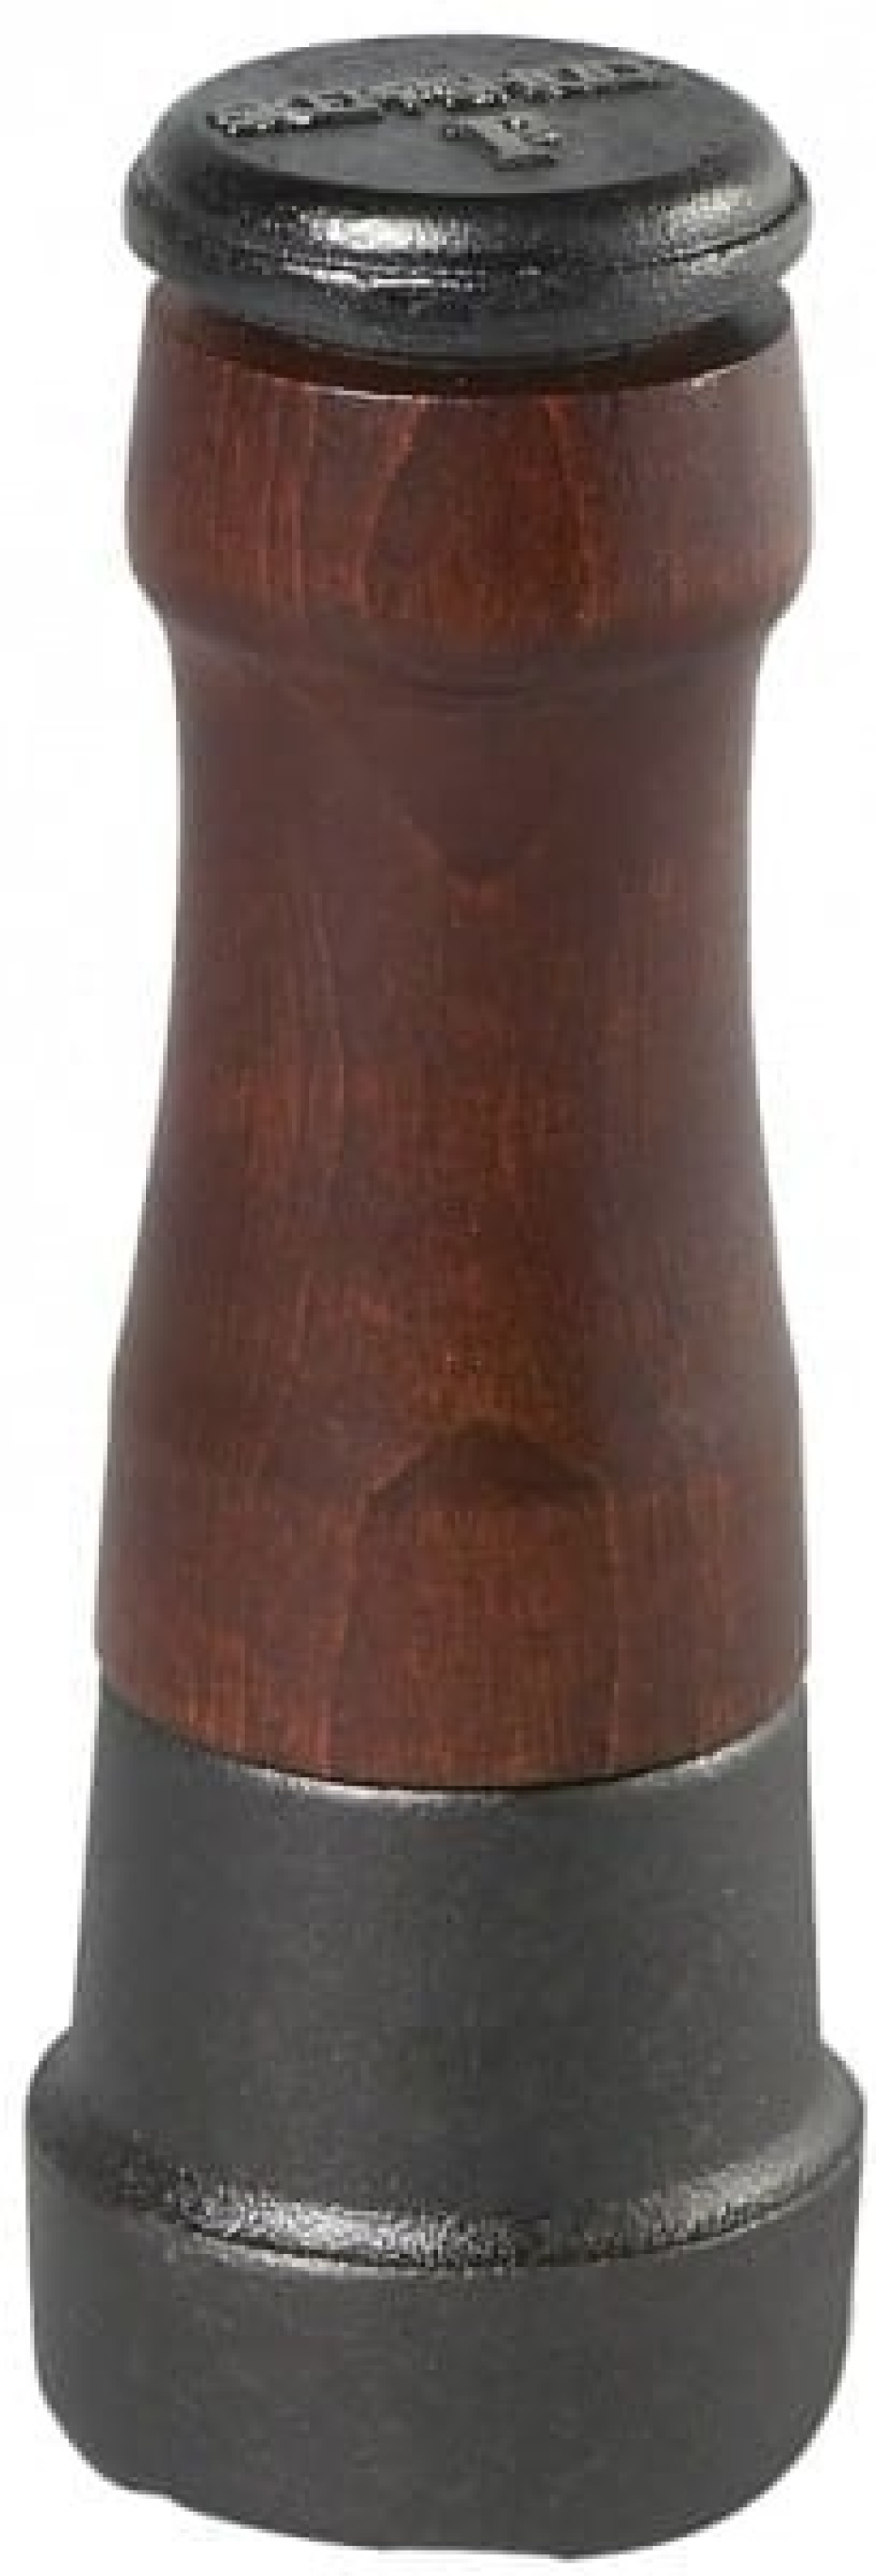 Skeppshult pepparkvarn, 18 cm, Brunbok i gruppen Matlagning / Köksredskap / Salt- & pepparkvarnar hos The Kitchen Lab (1146-13181)